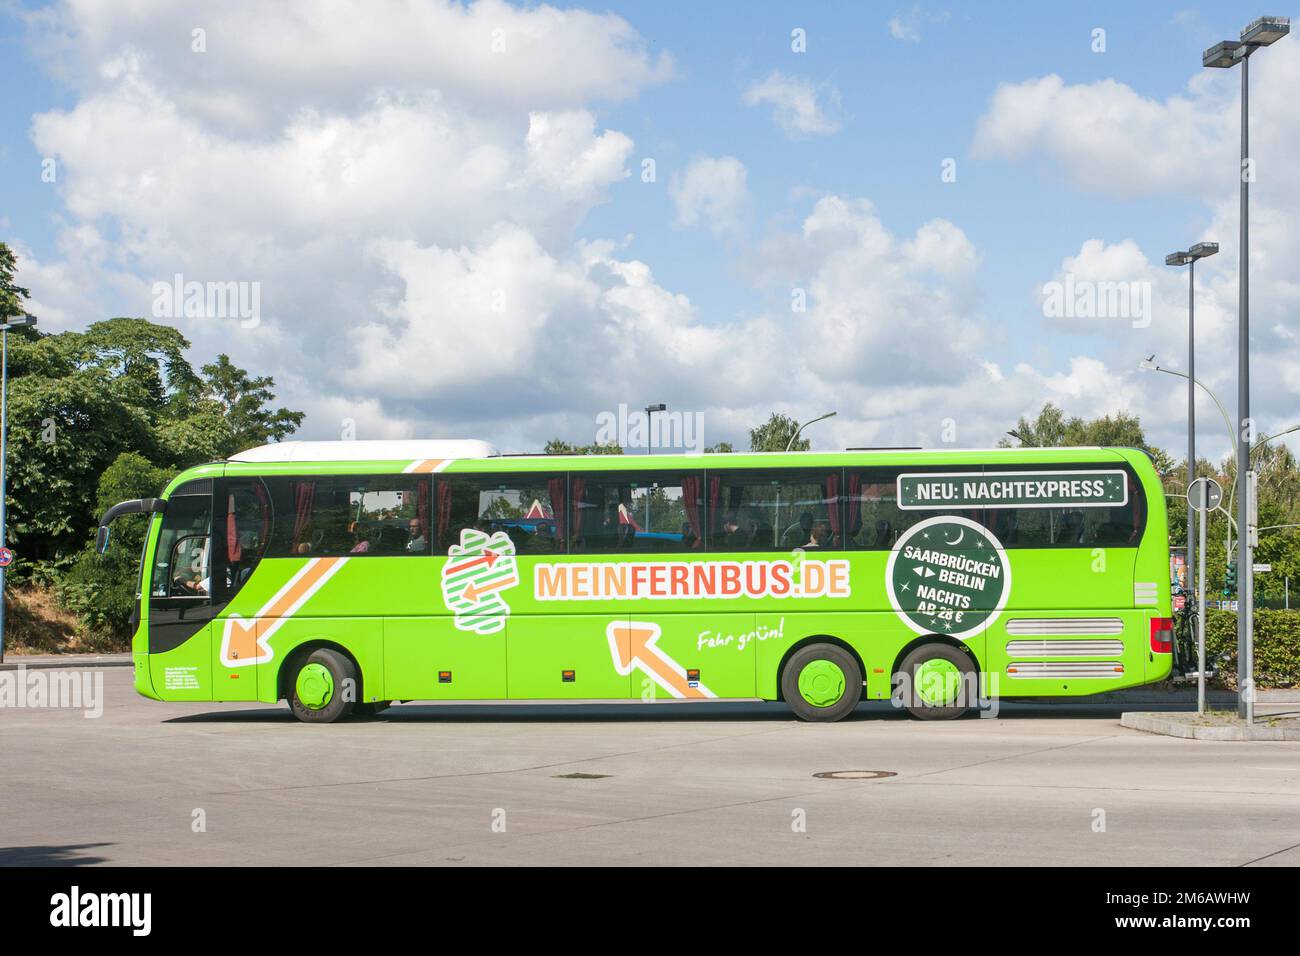 Flixbus coach in Berlin Stock Photo - Alamy